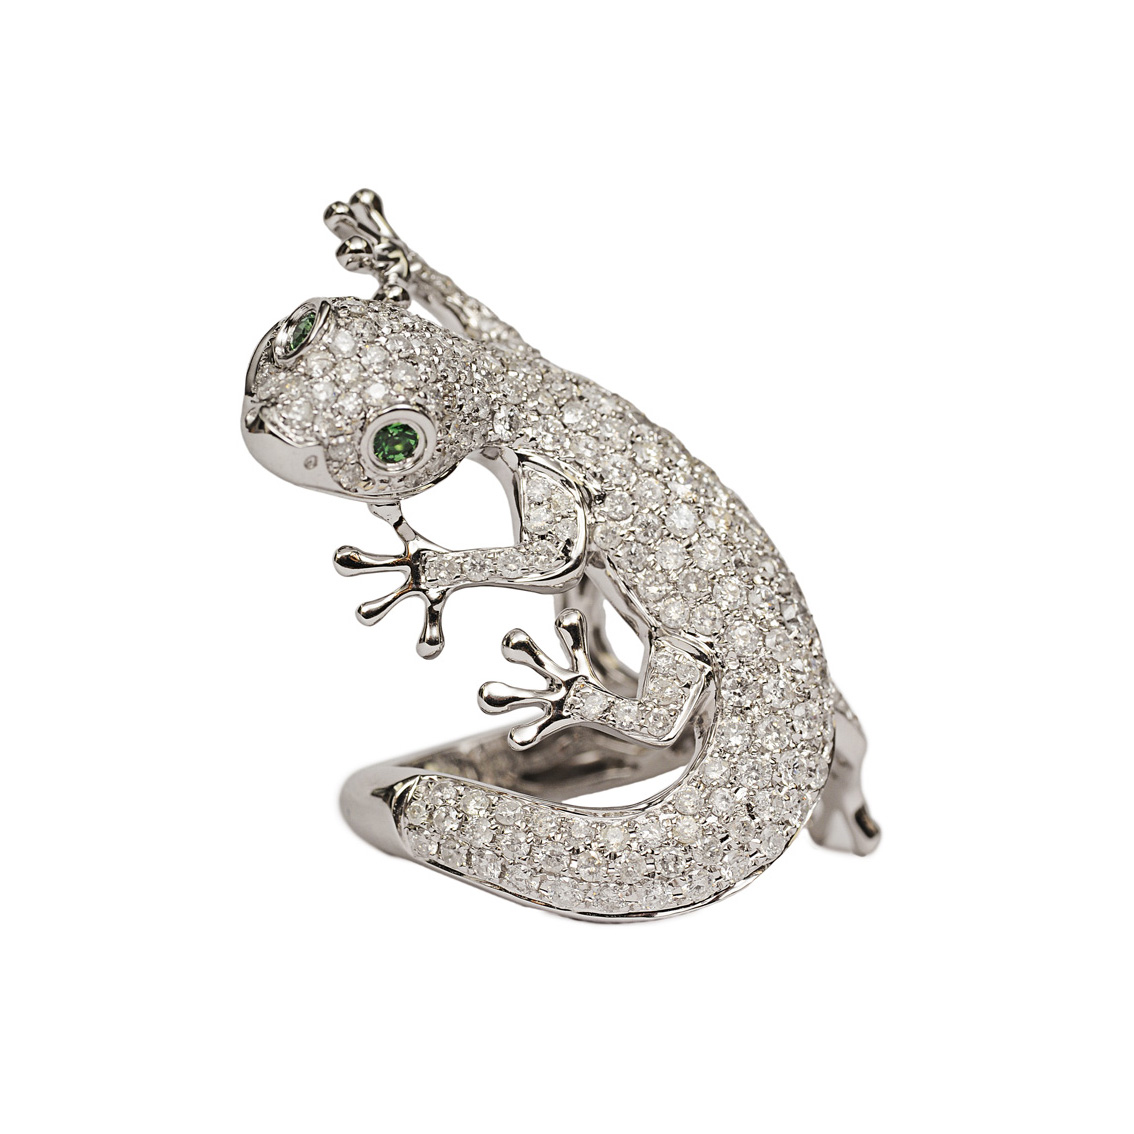 An extraordinary diamond ring "Gecko